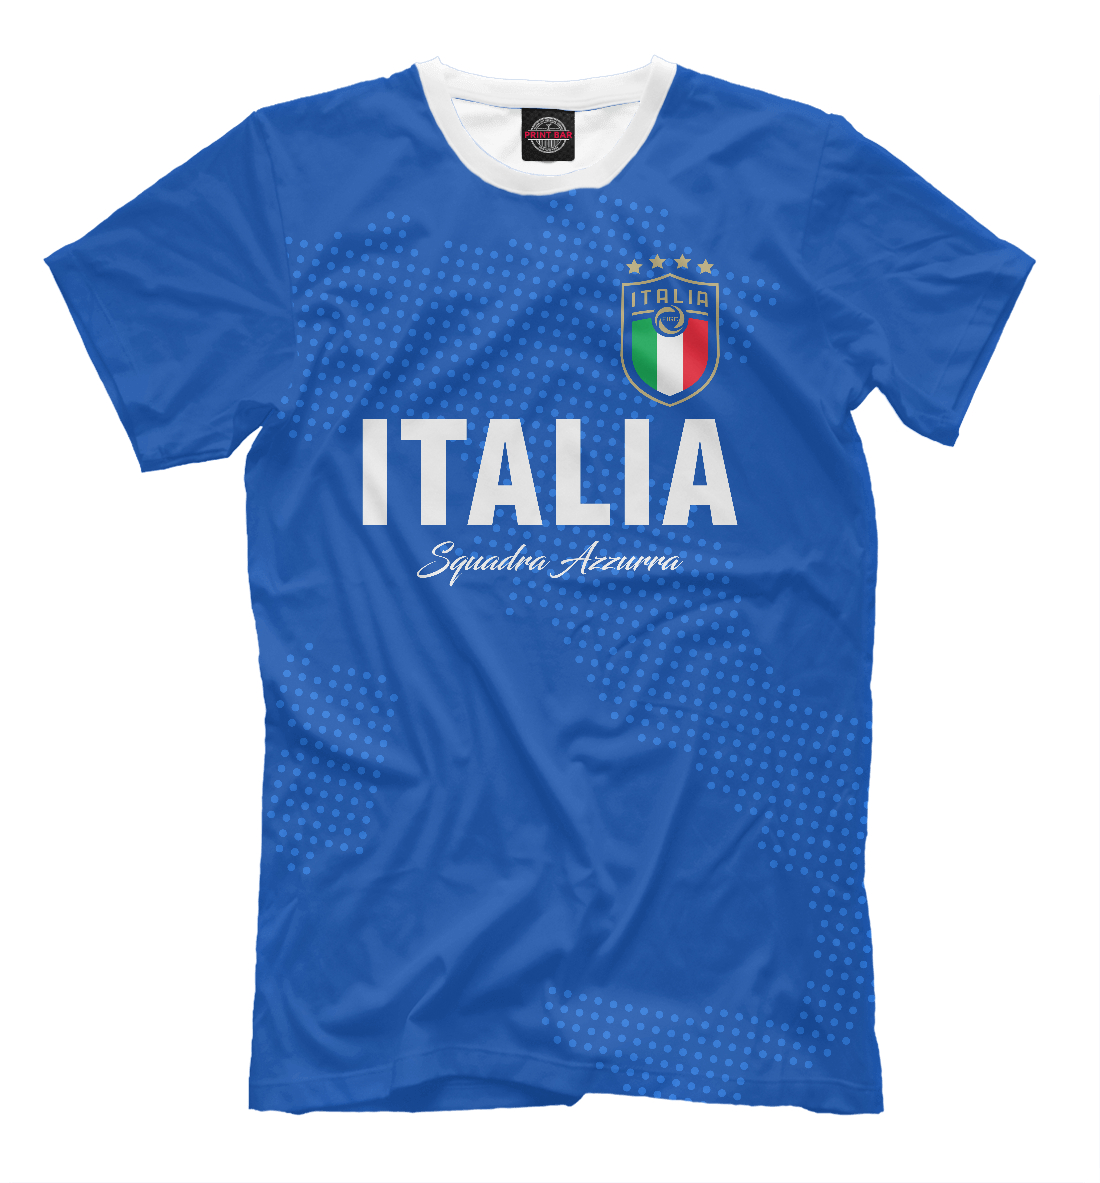 Футболка Италия для мужчин, артикул: FNS-186686-fut-2mp